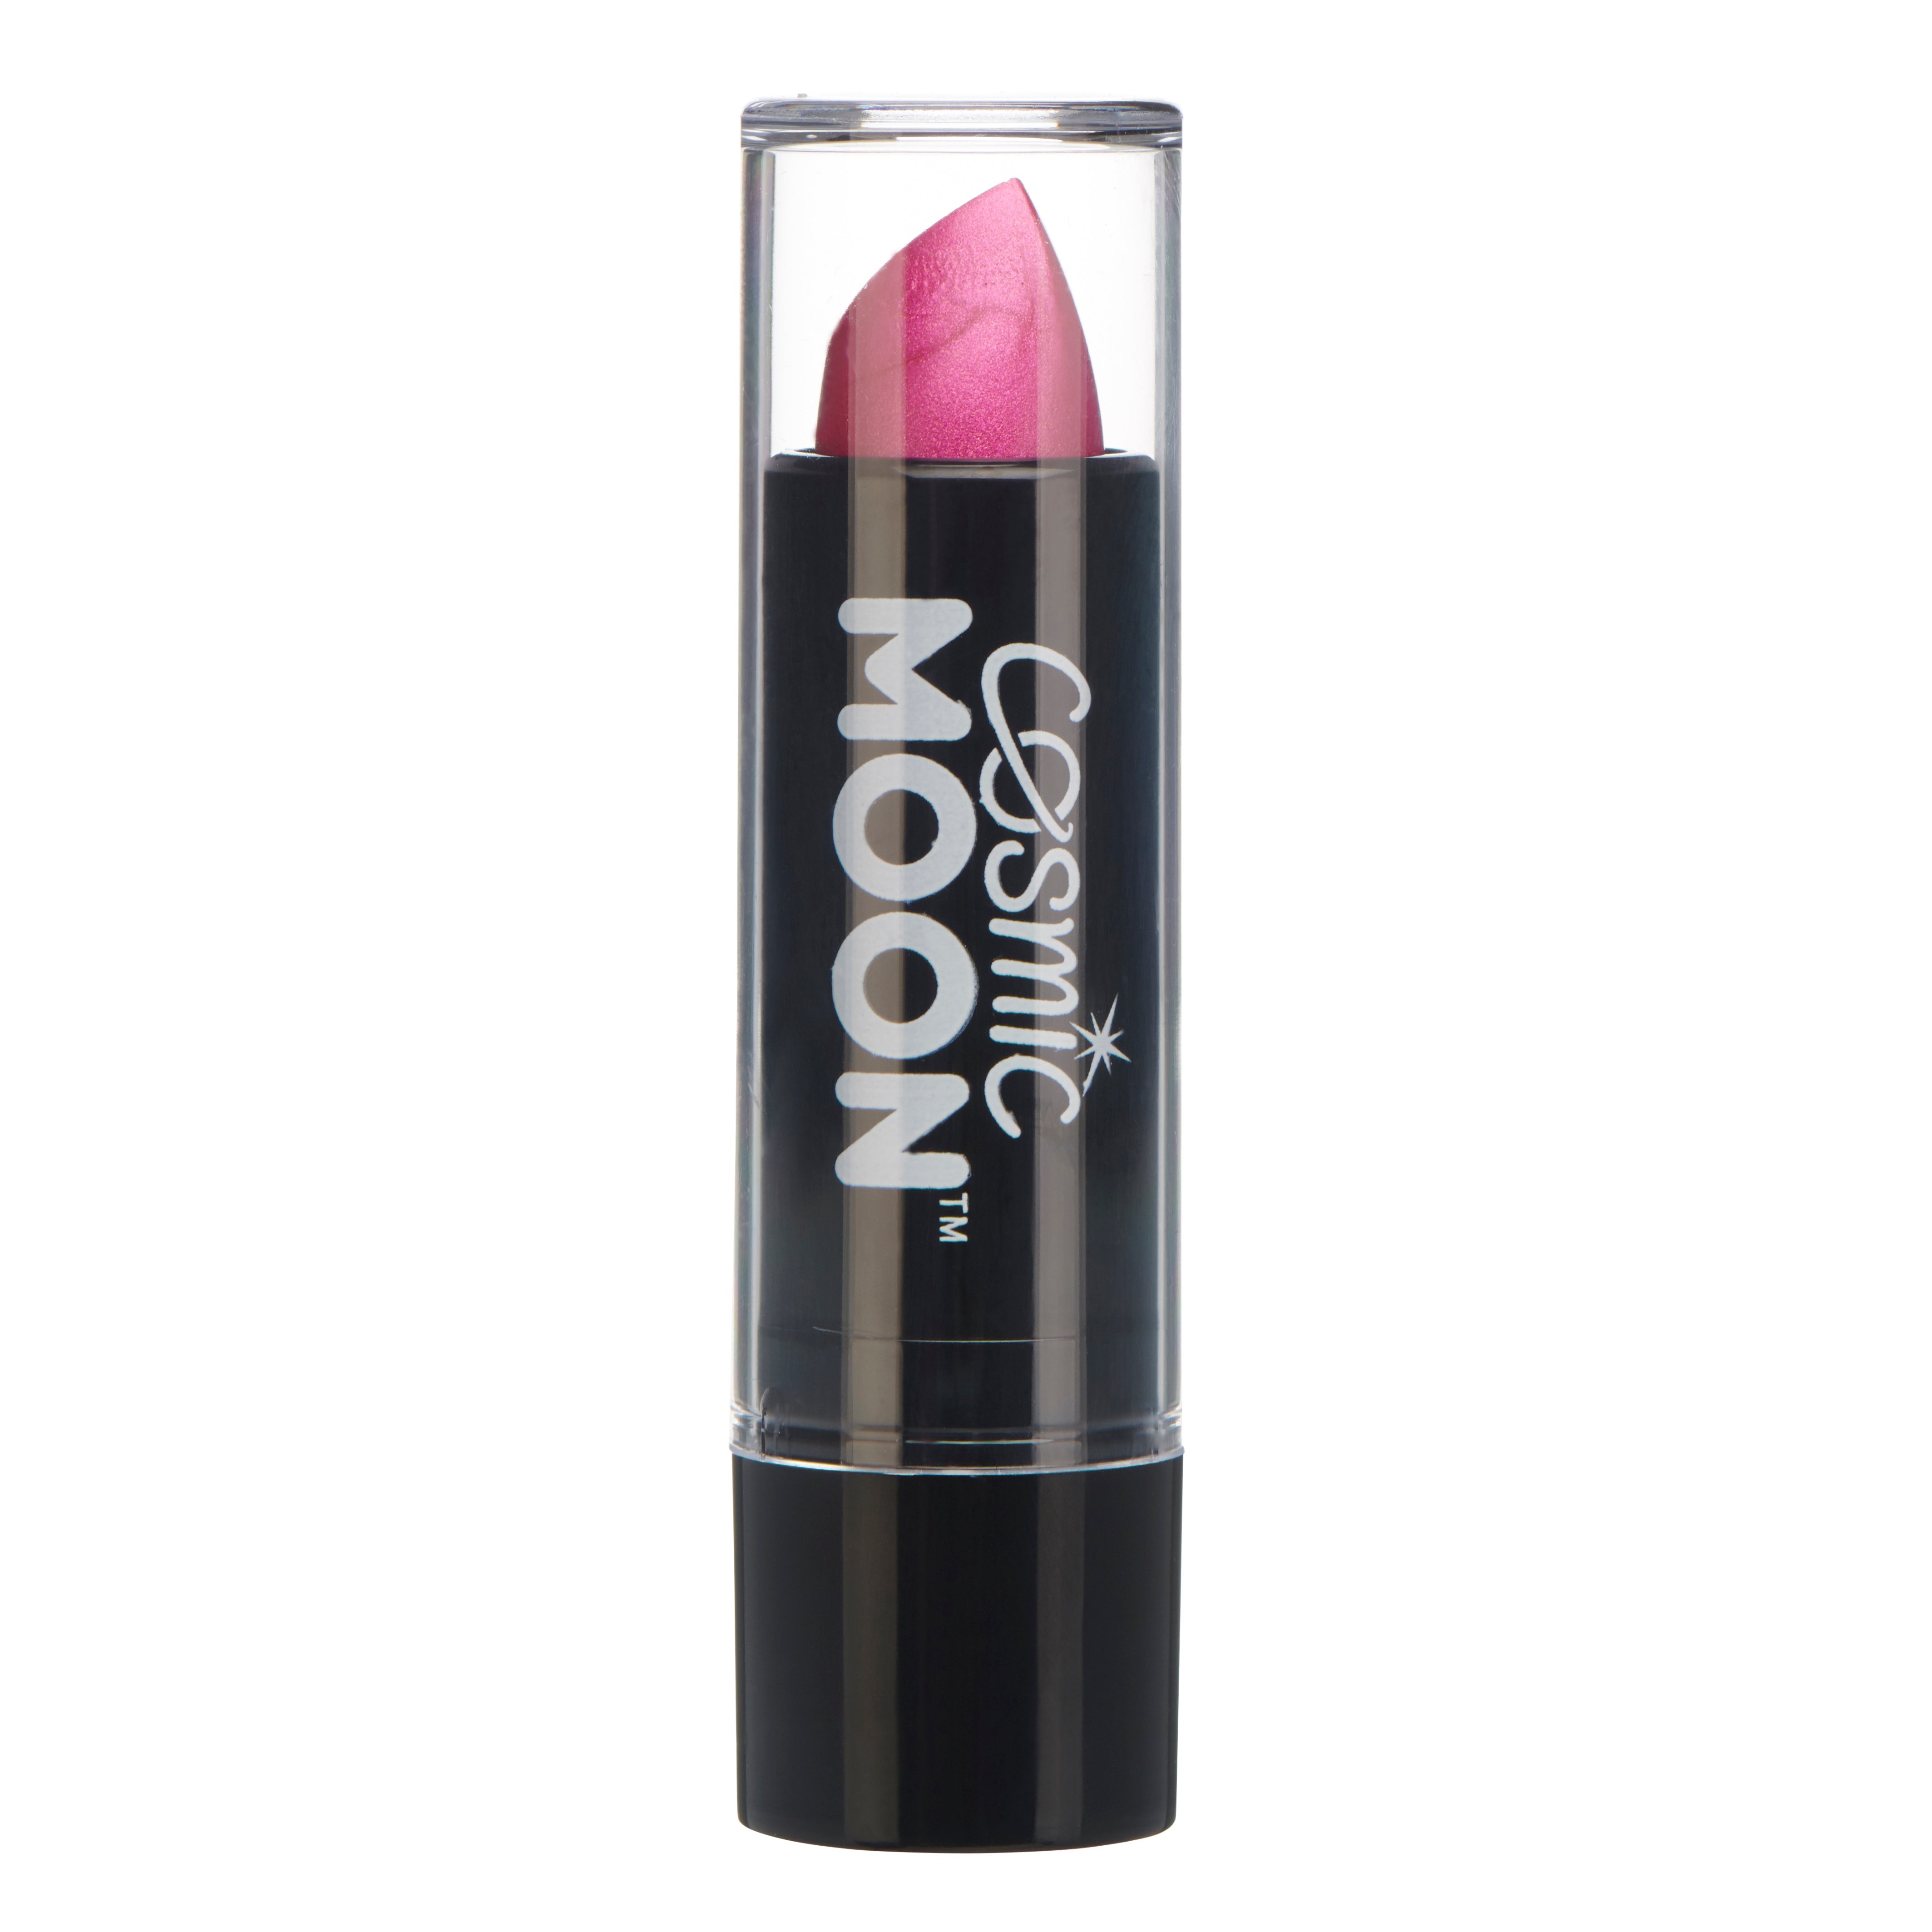 Pink - Metallic Lipstick, 5g. Cosmetically certified, FDA & Health Canada compliant and cruelty free.